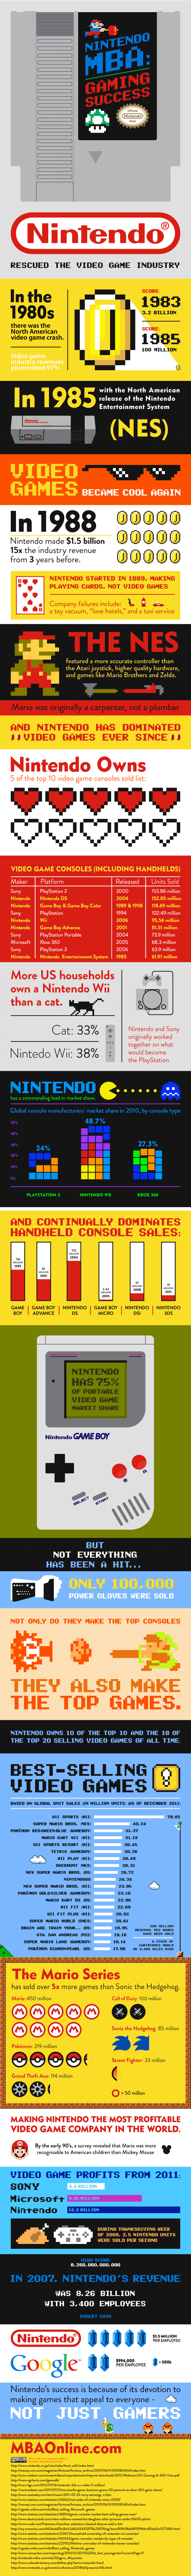 Nintendo MBA Gaming Success